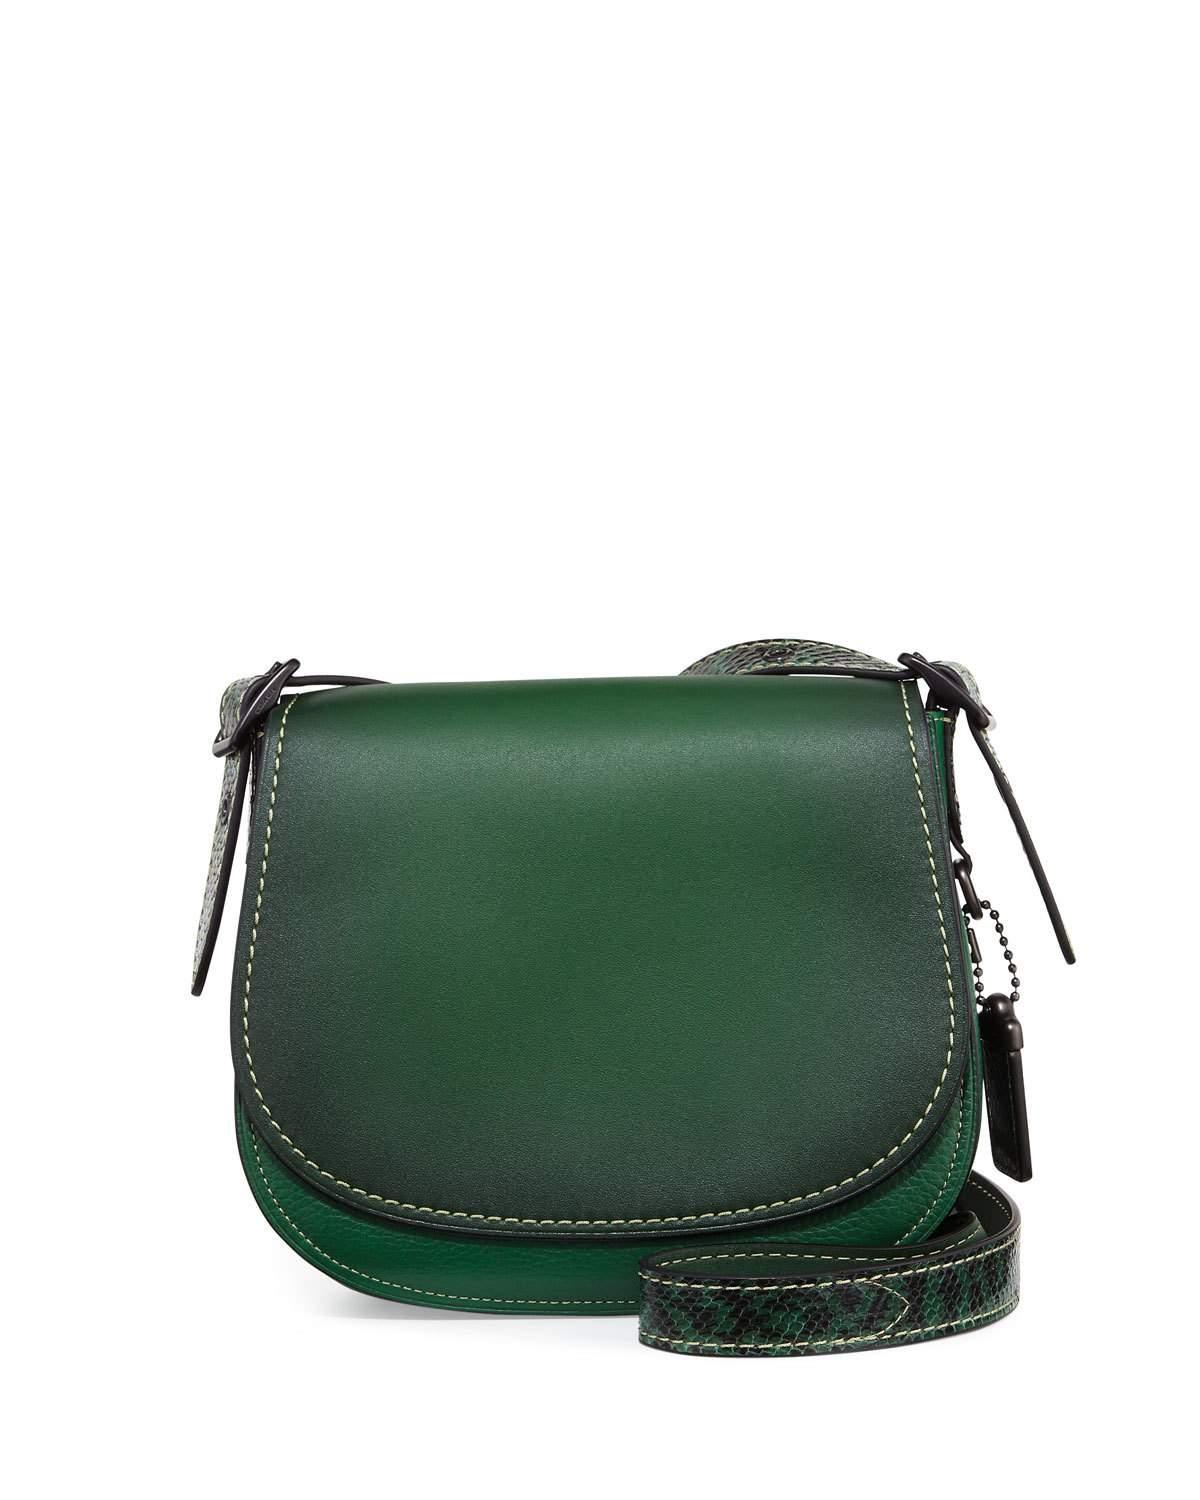 COACH 23 Python-strap Saddle Bag in Green - Lyst